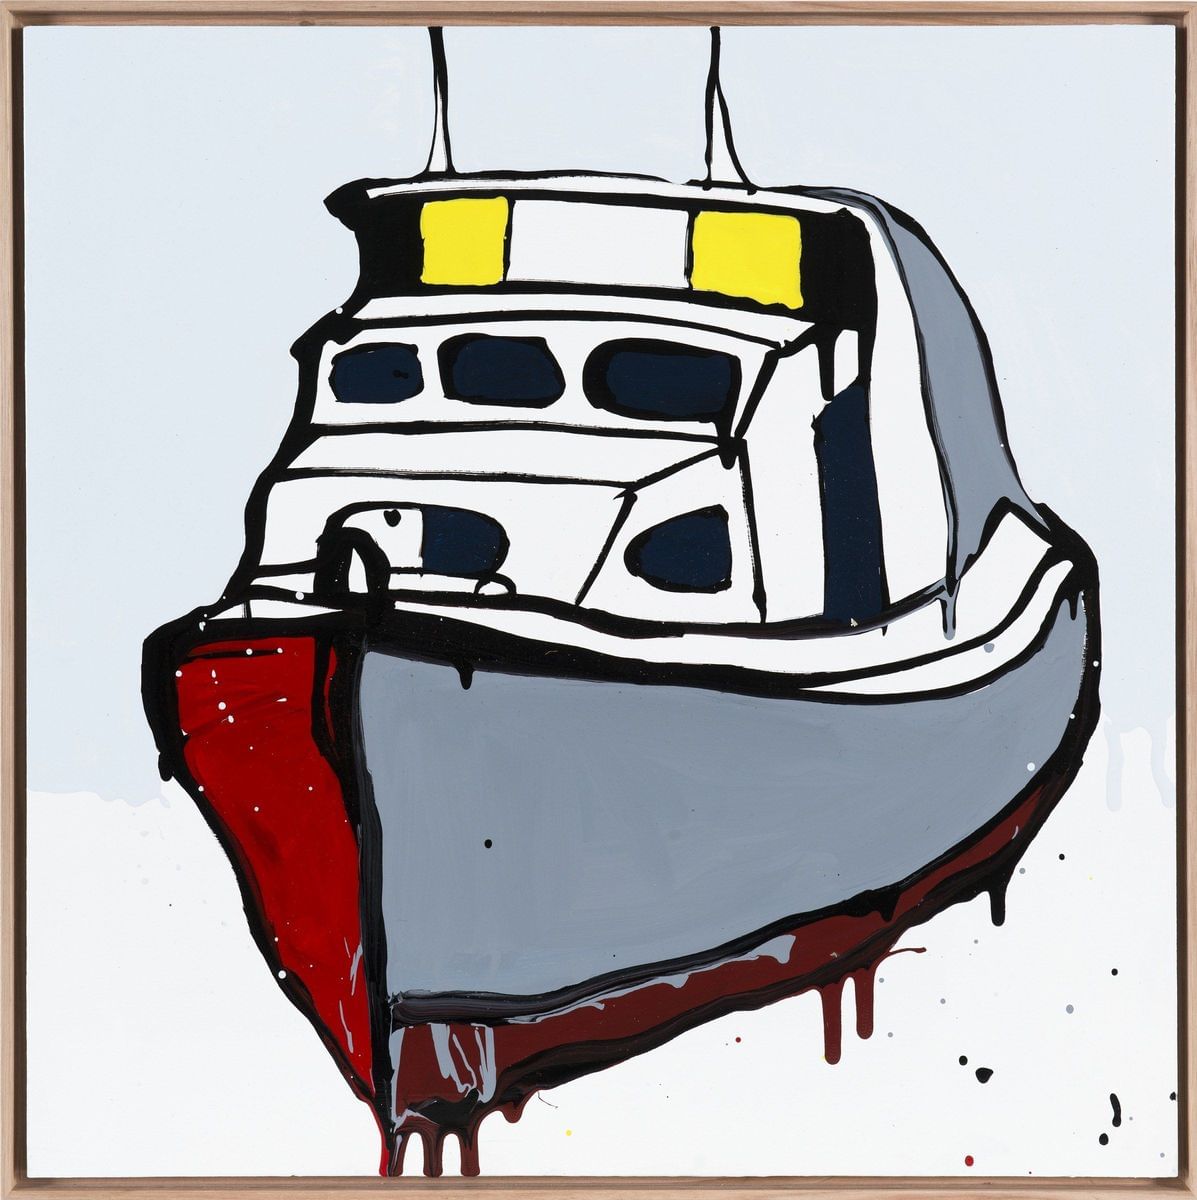 Jasper Knight - Broken Jetty Boat, Manly